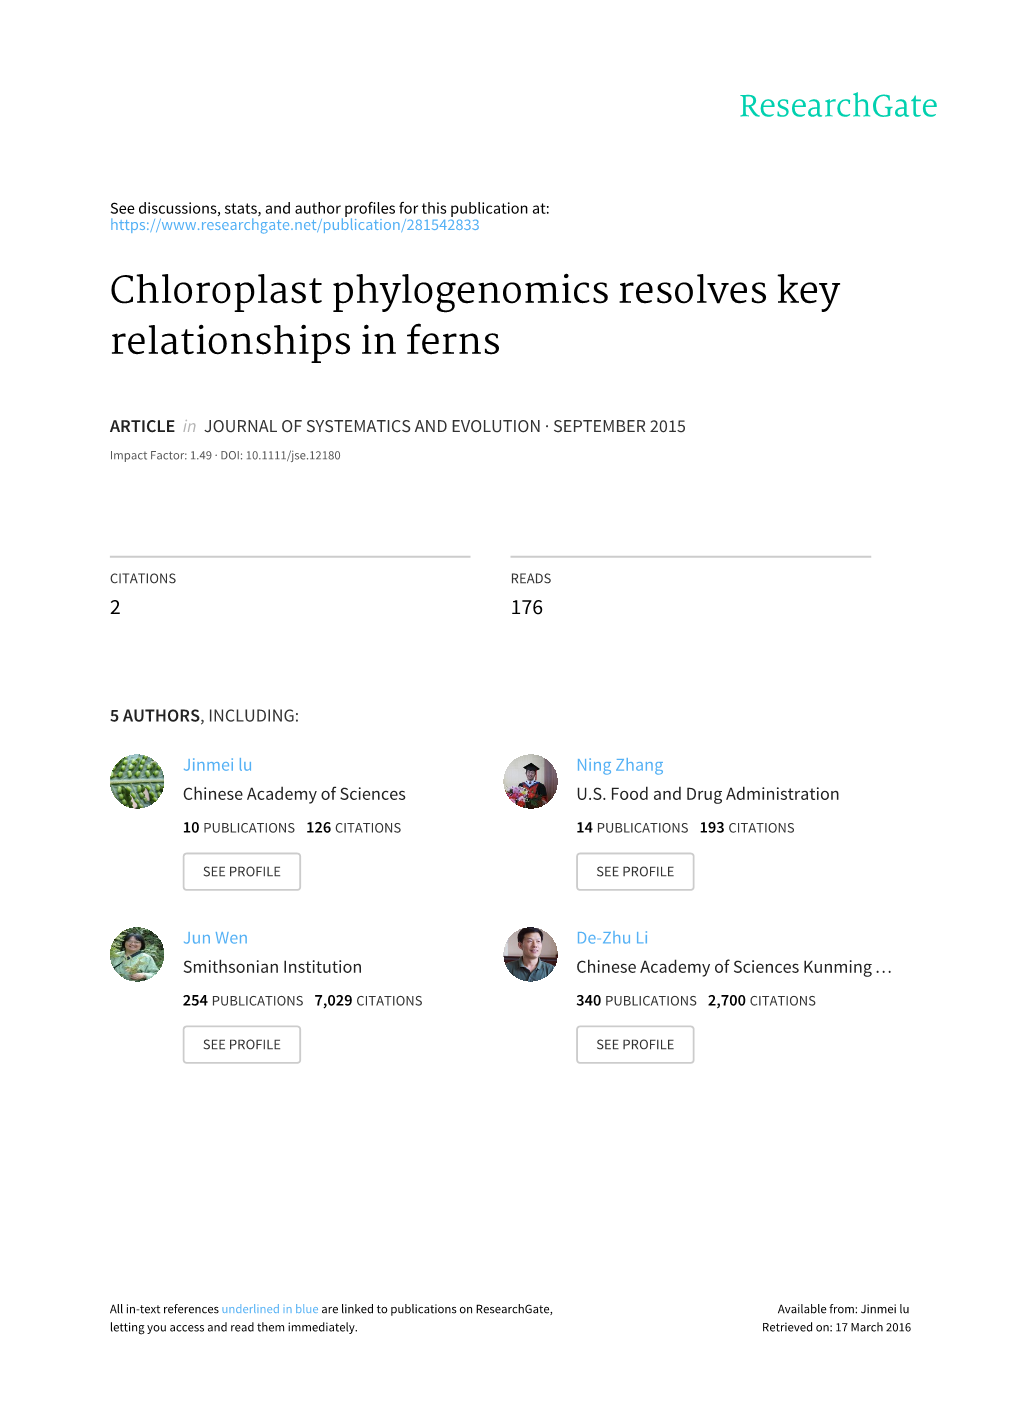 Chloroplast Phylogenomics Resolves Key Relationships in Ferns